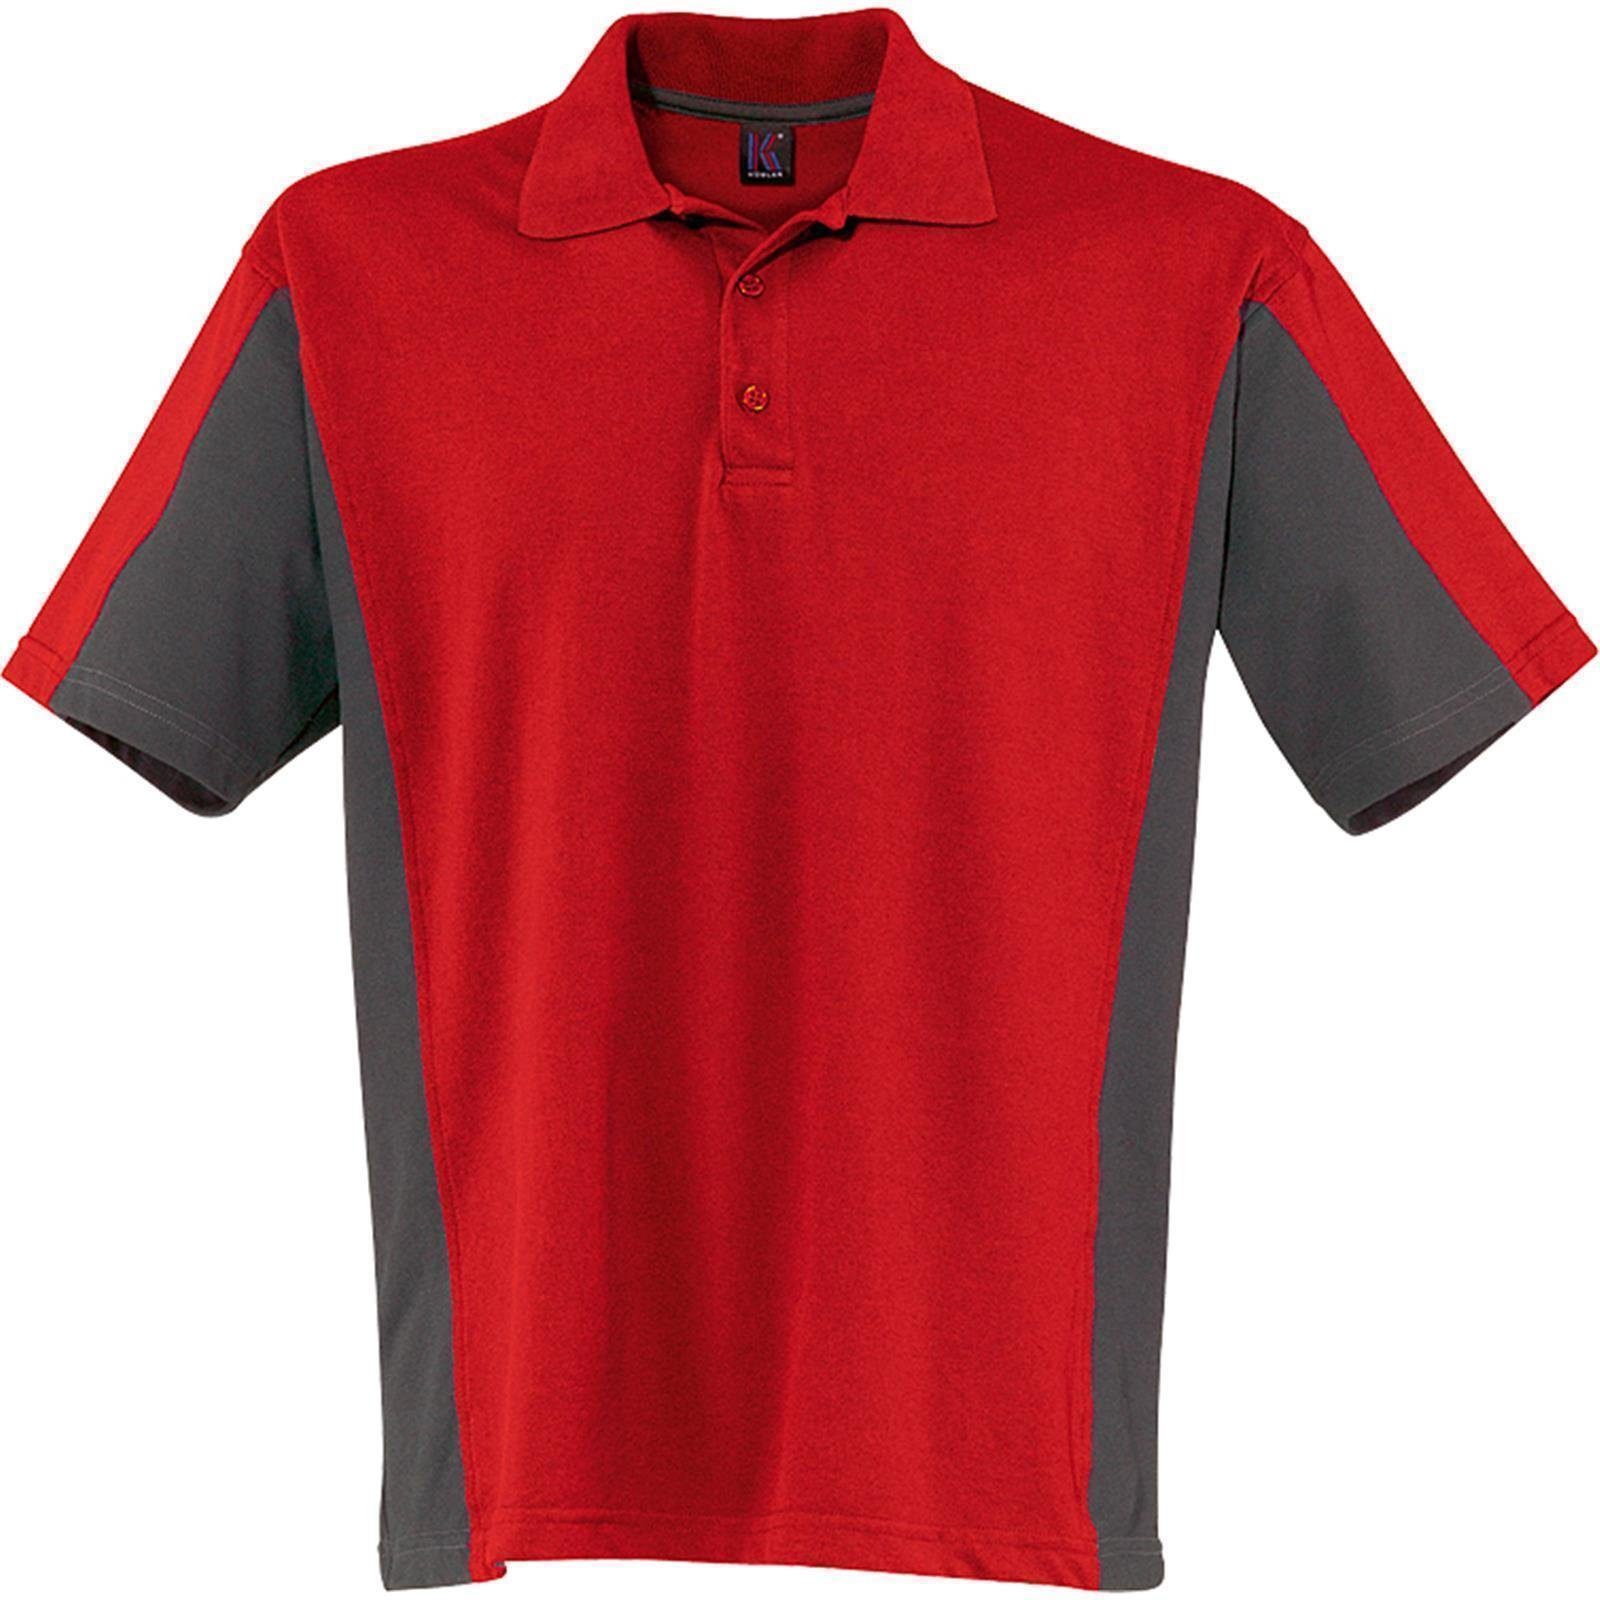 Kübler Poloshirt Kübler rot/anthrazit Shirt-Dress